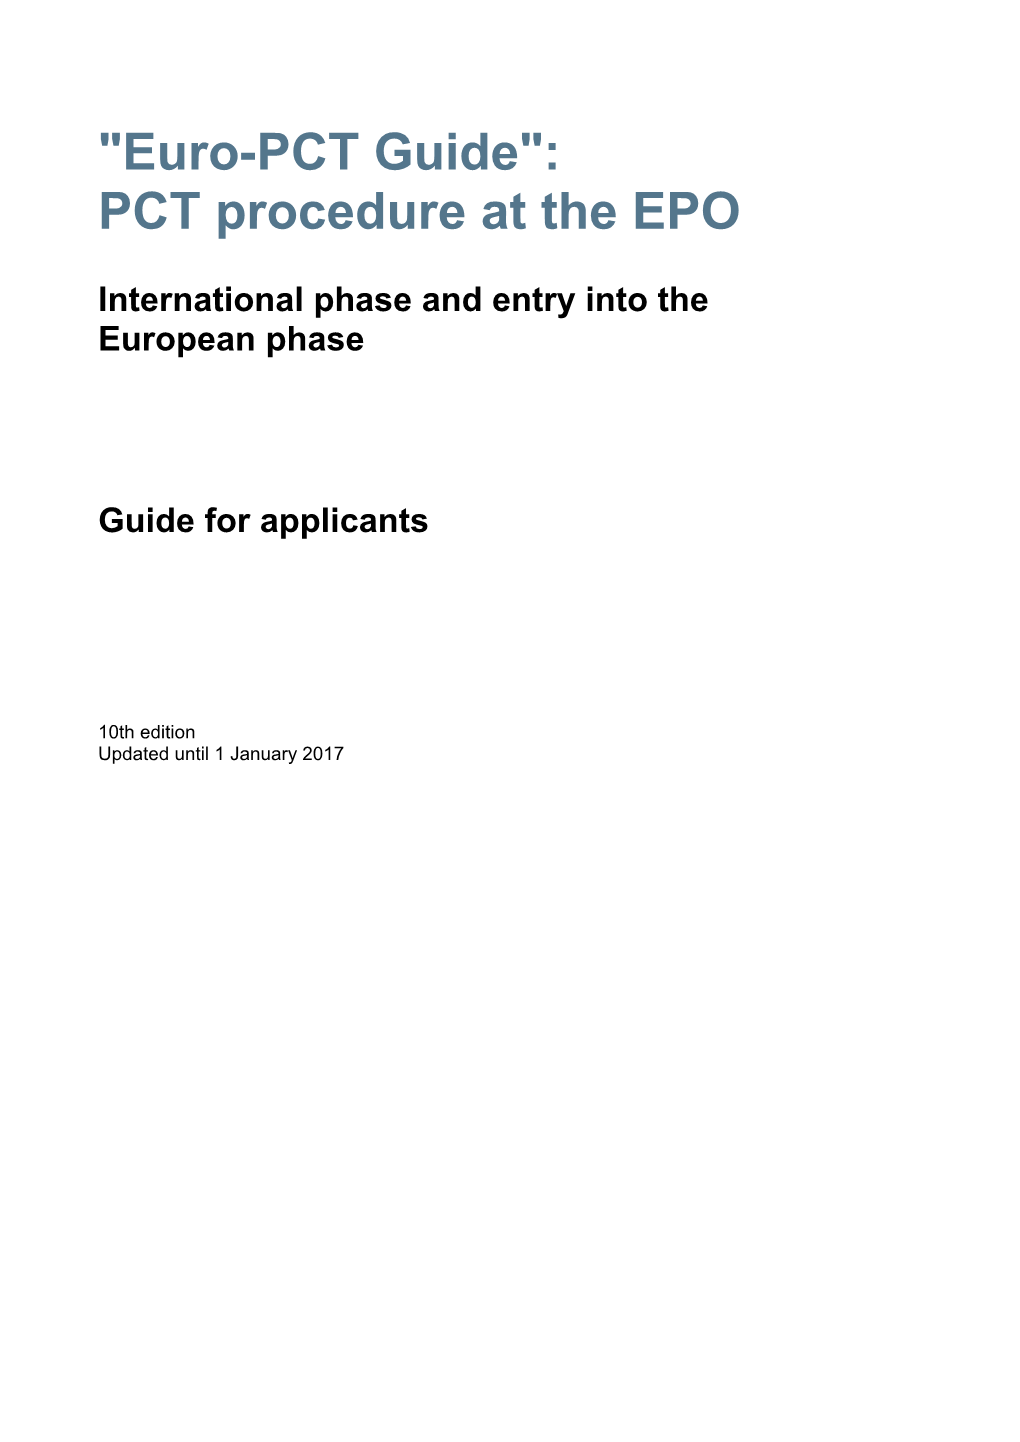 "Euro-PCT Guide": PCT Procedure at the EPO